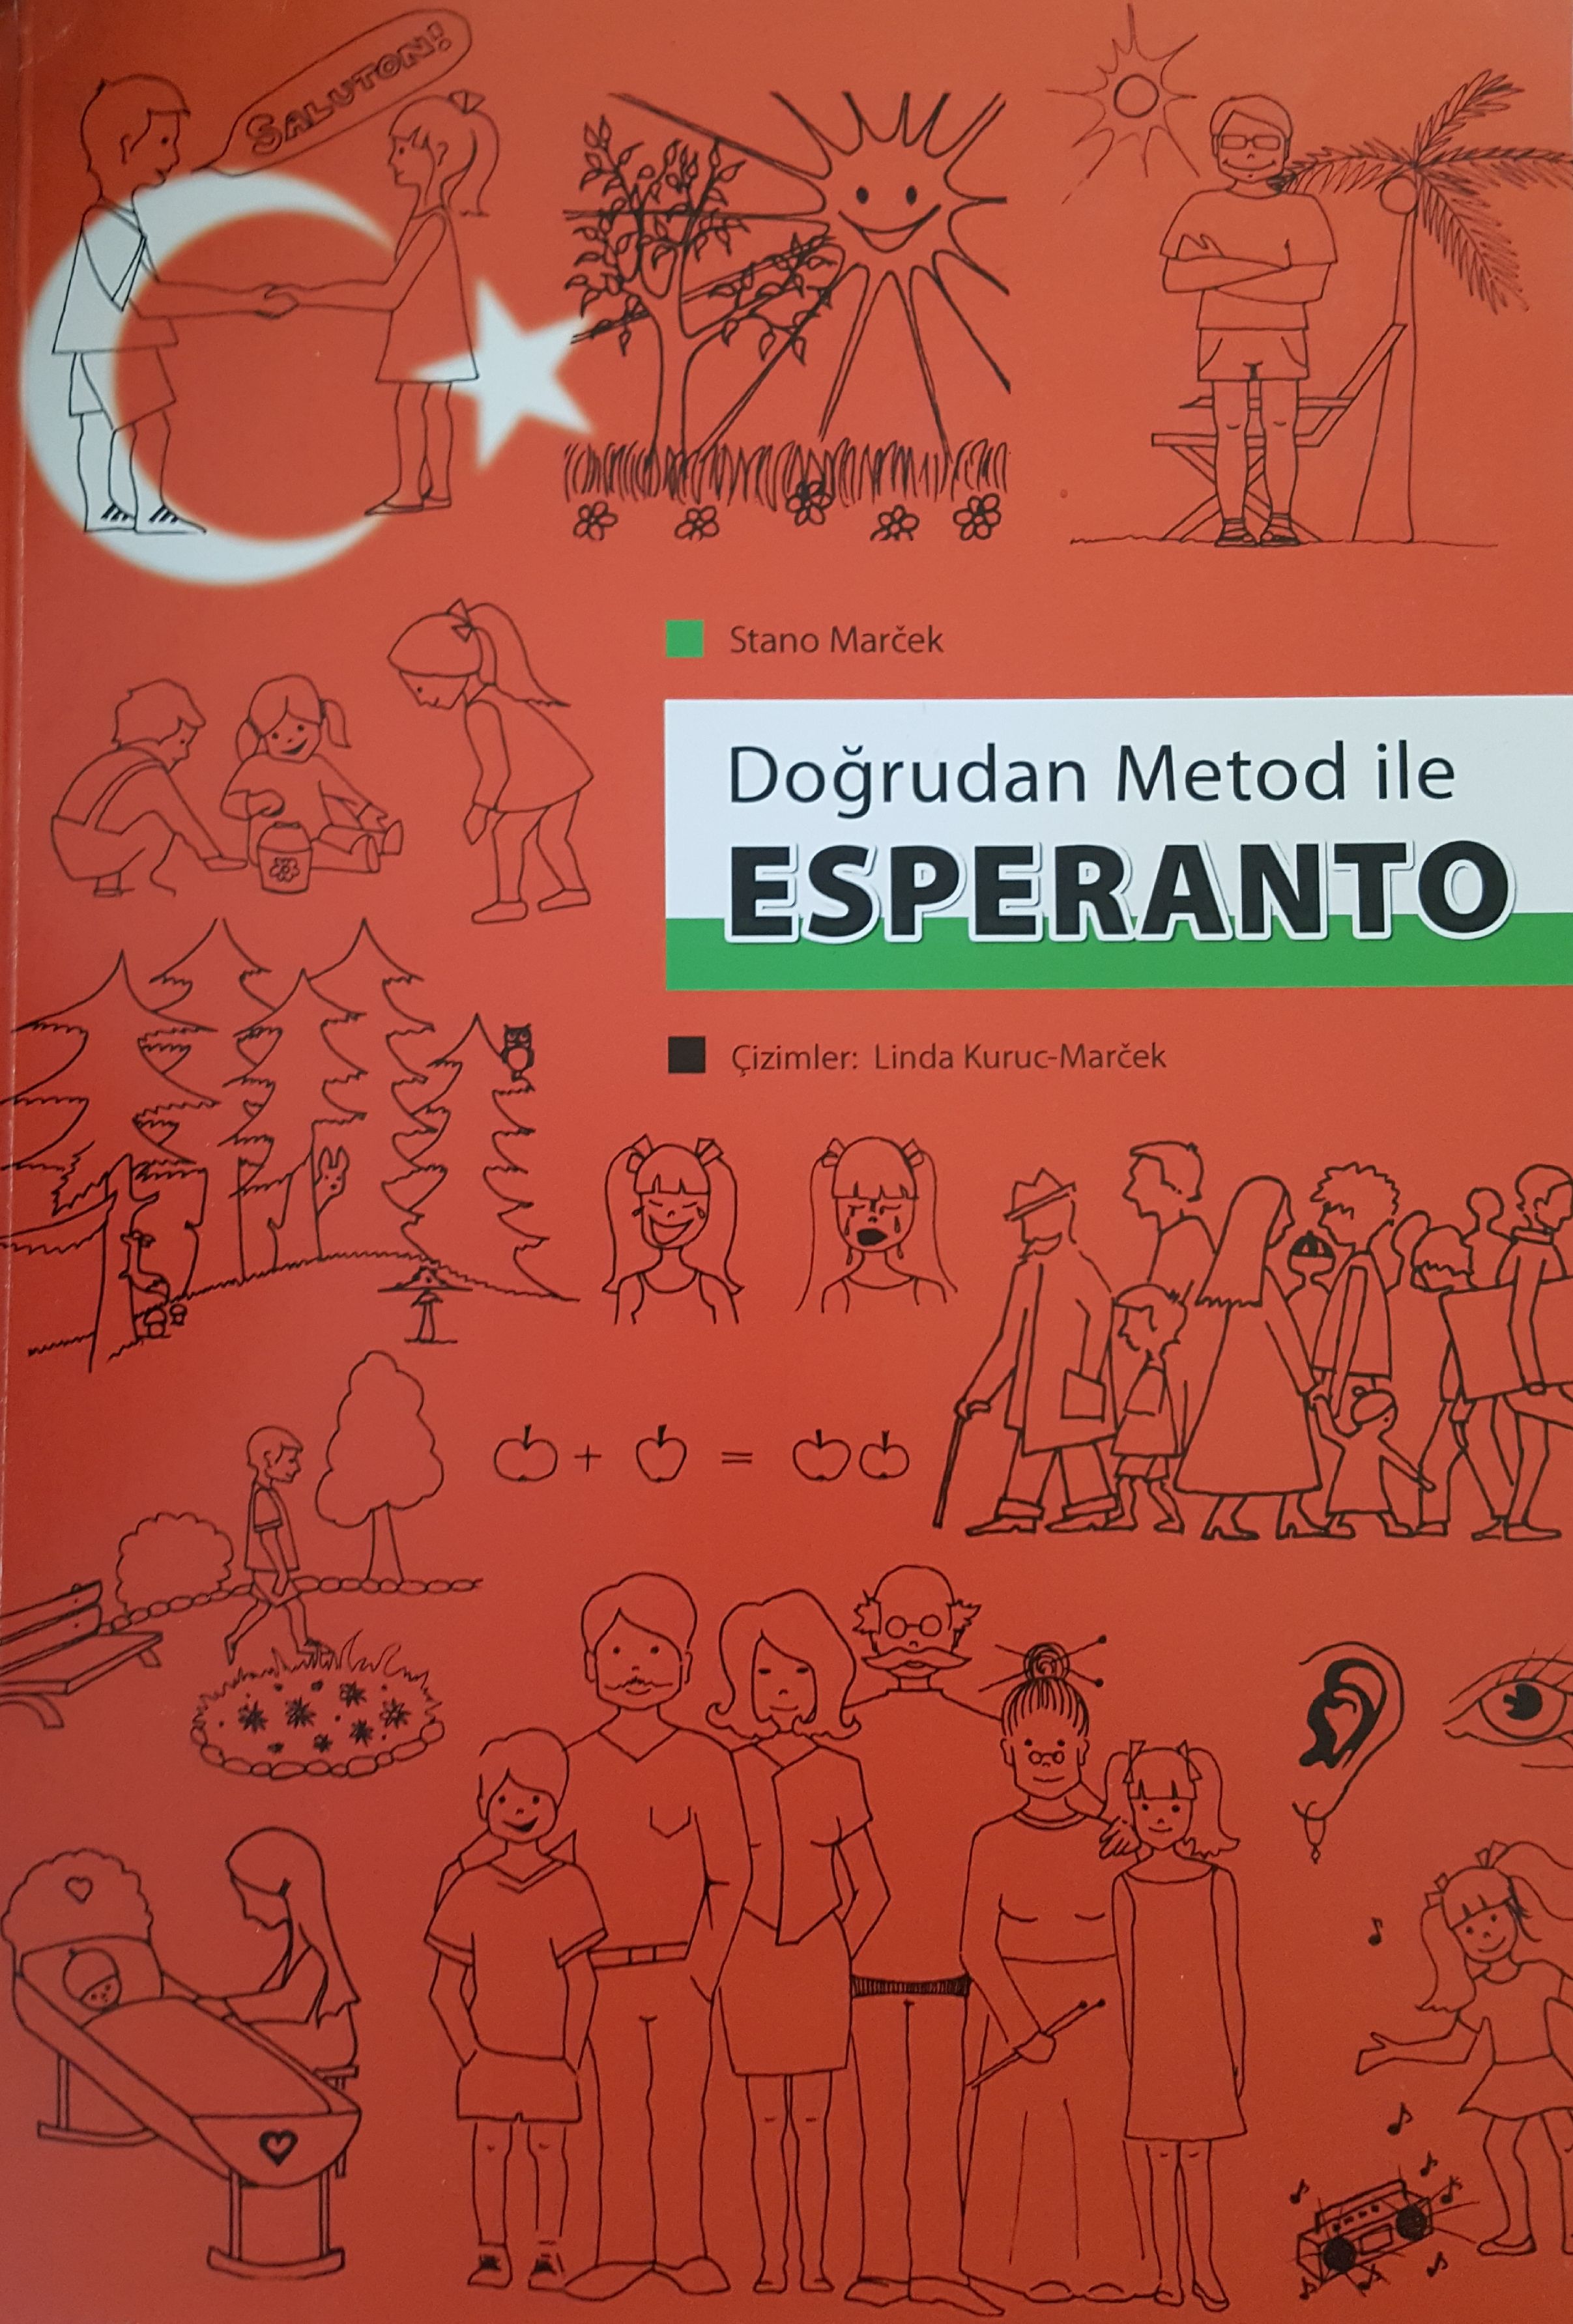 Doğrudan Metod ile Esperanto.jpg